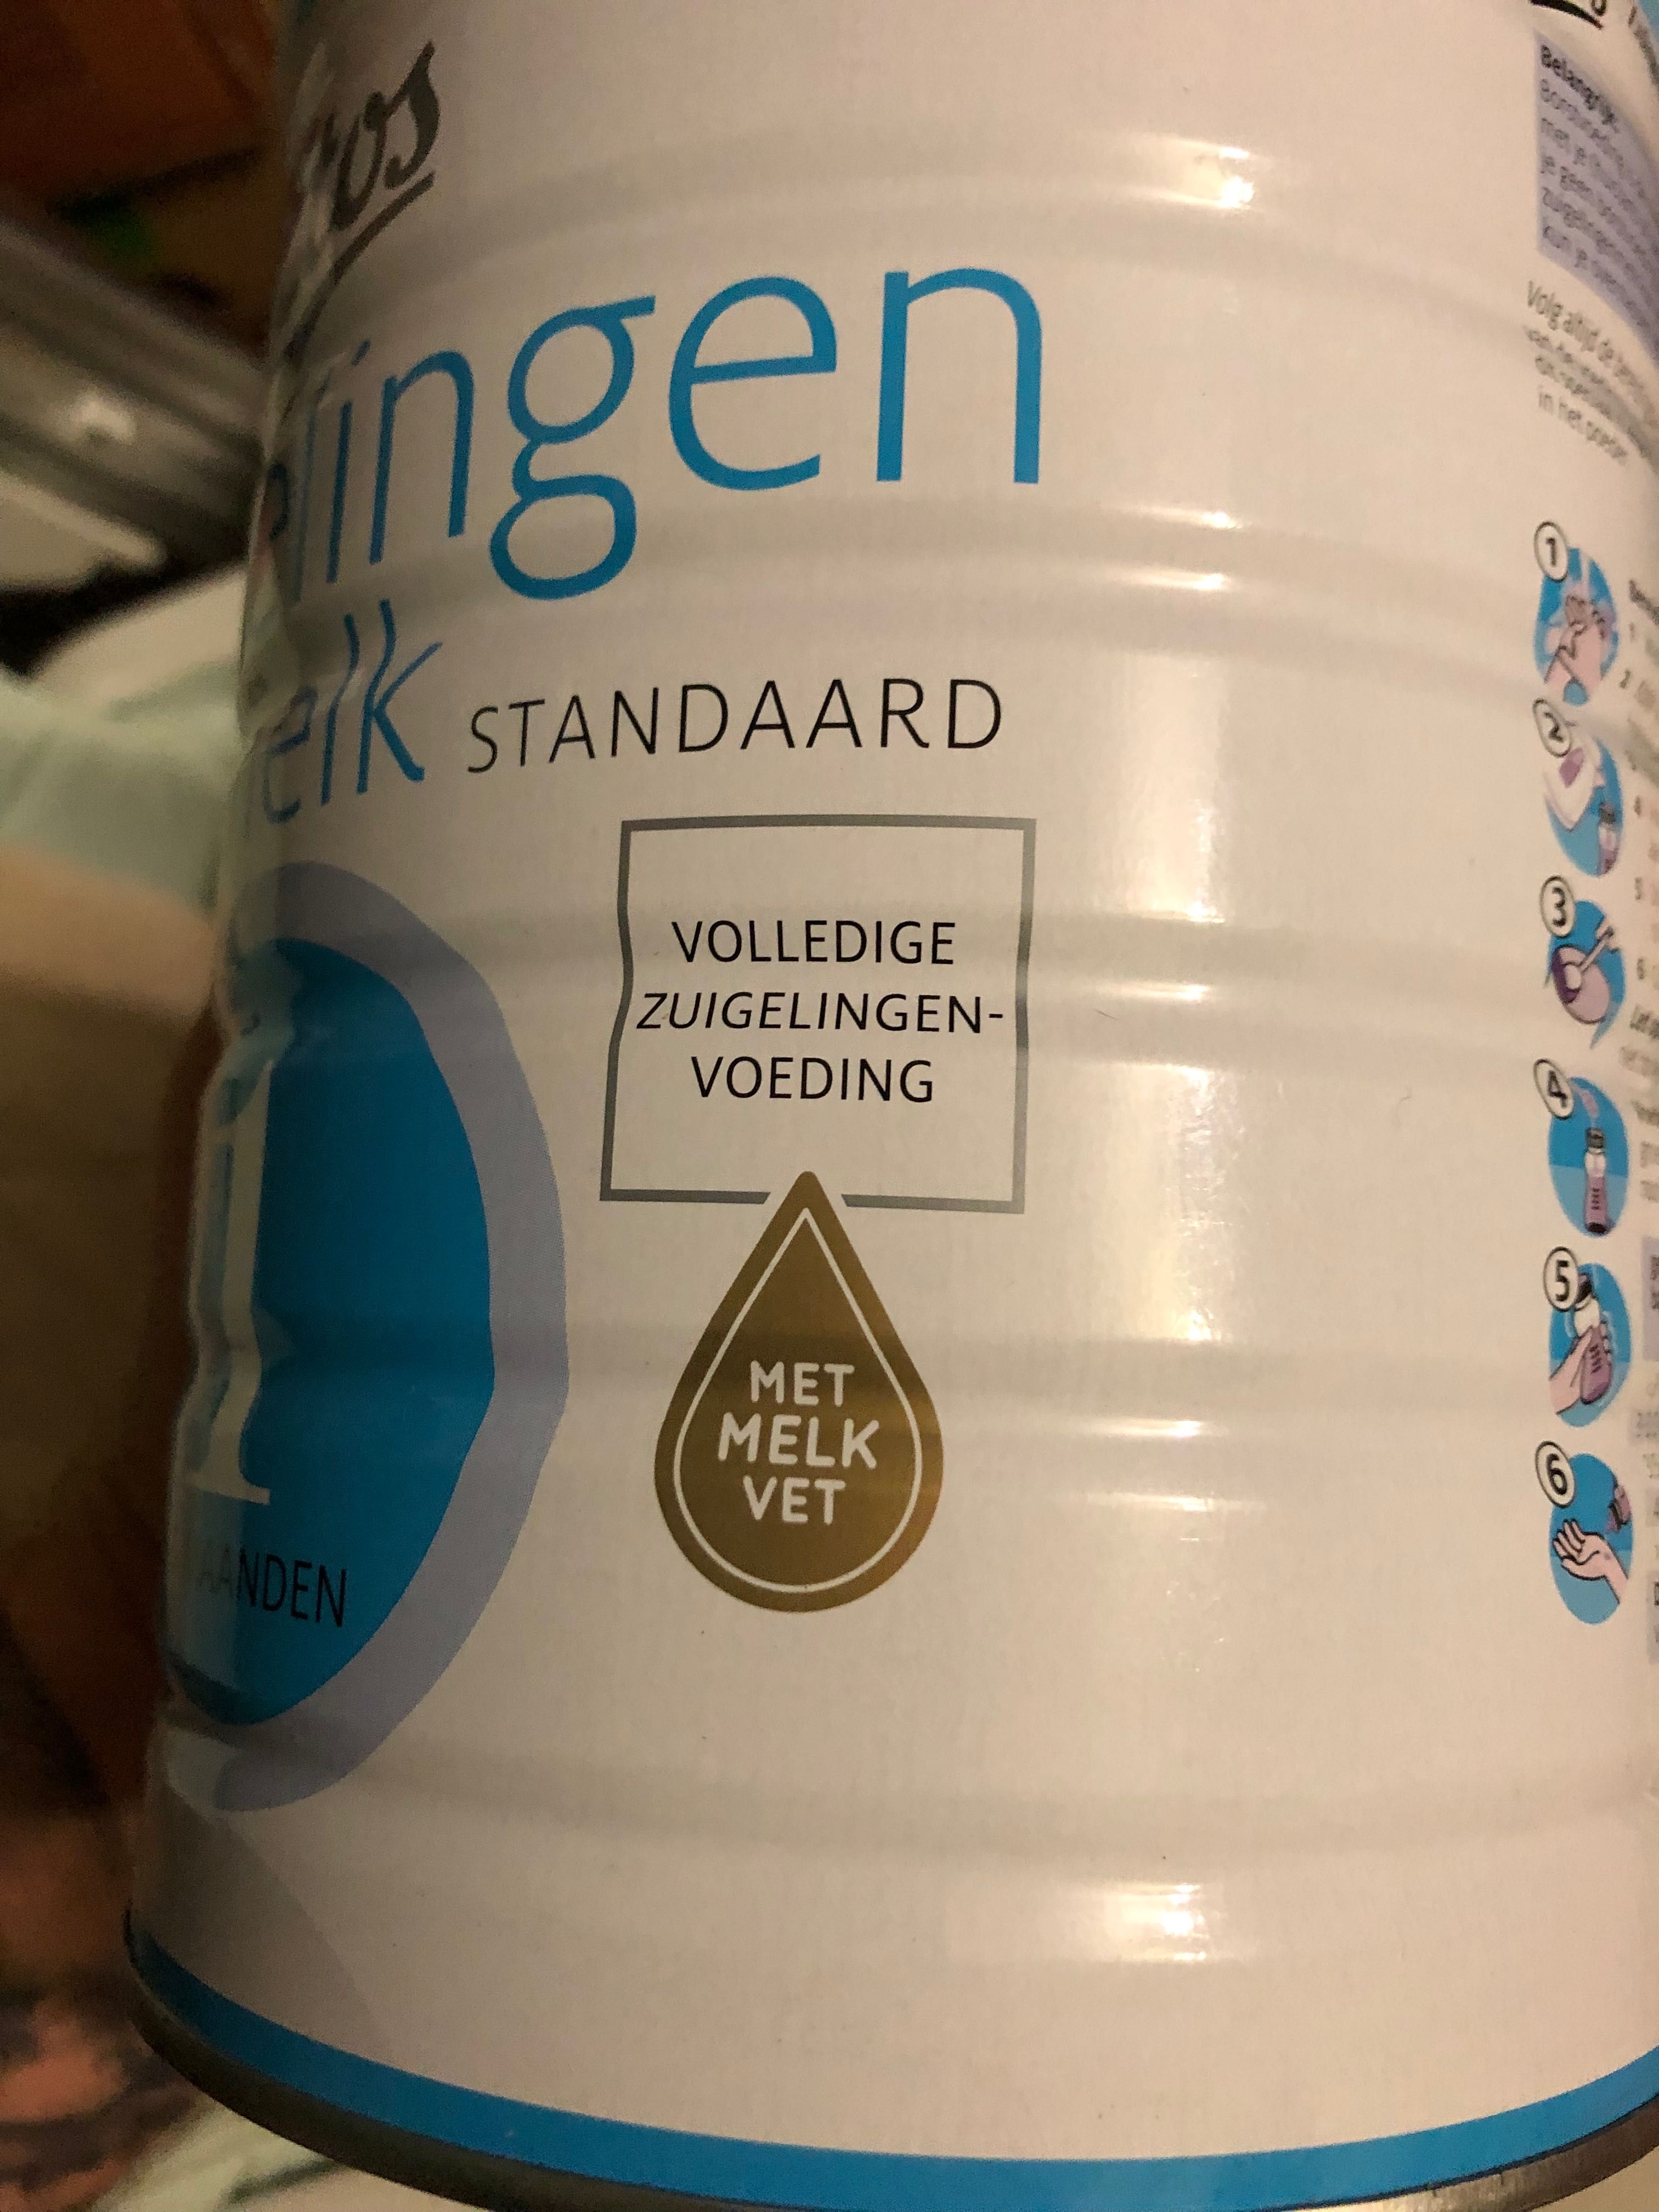 Смесь Etos Zuigelingen melk Standaard 1 суміш 800 грамм